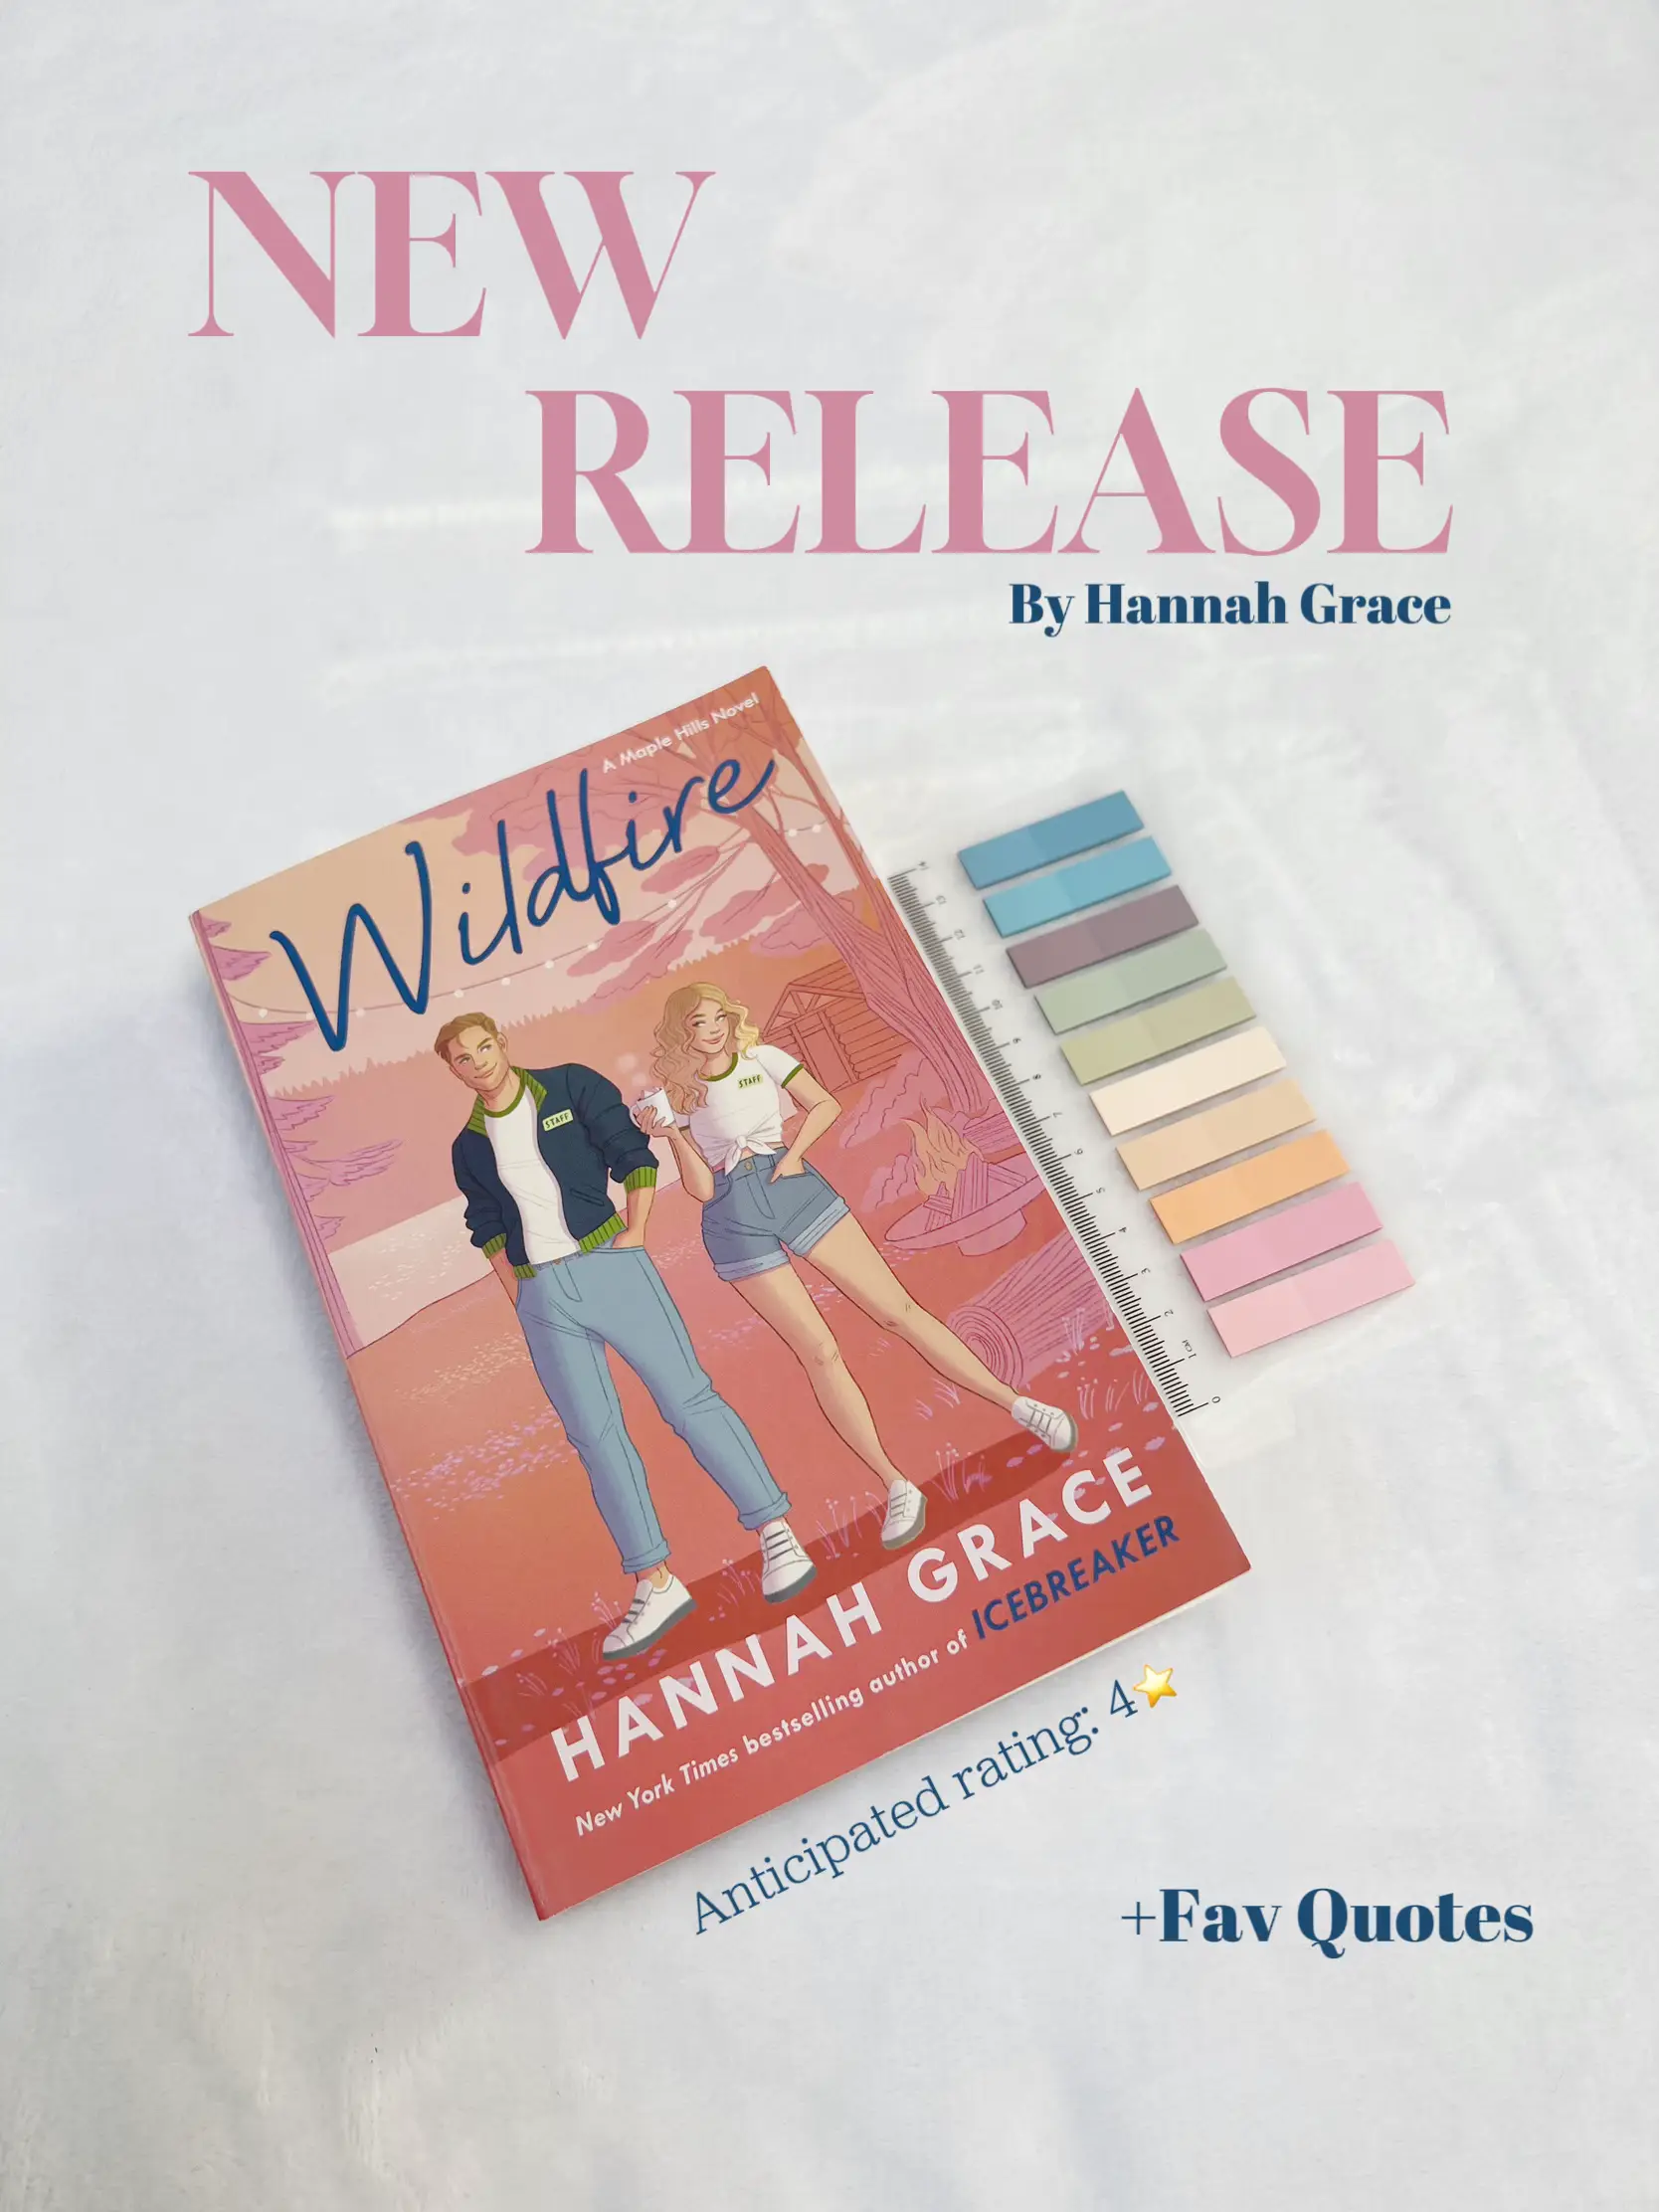 Wildfire book release by Hannah Grace - Lemon8 Search